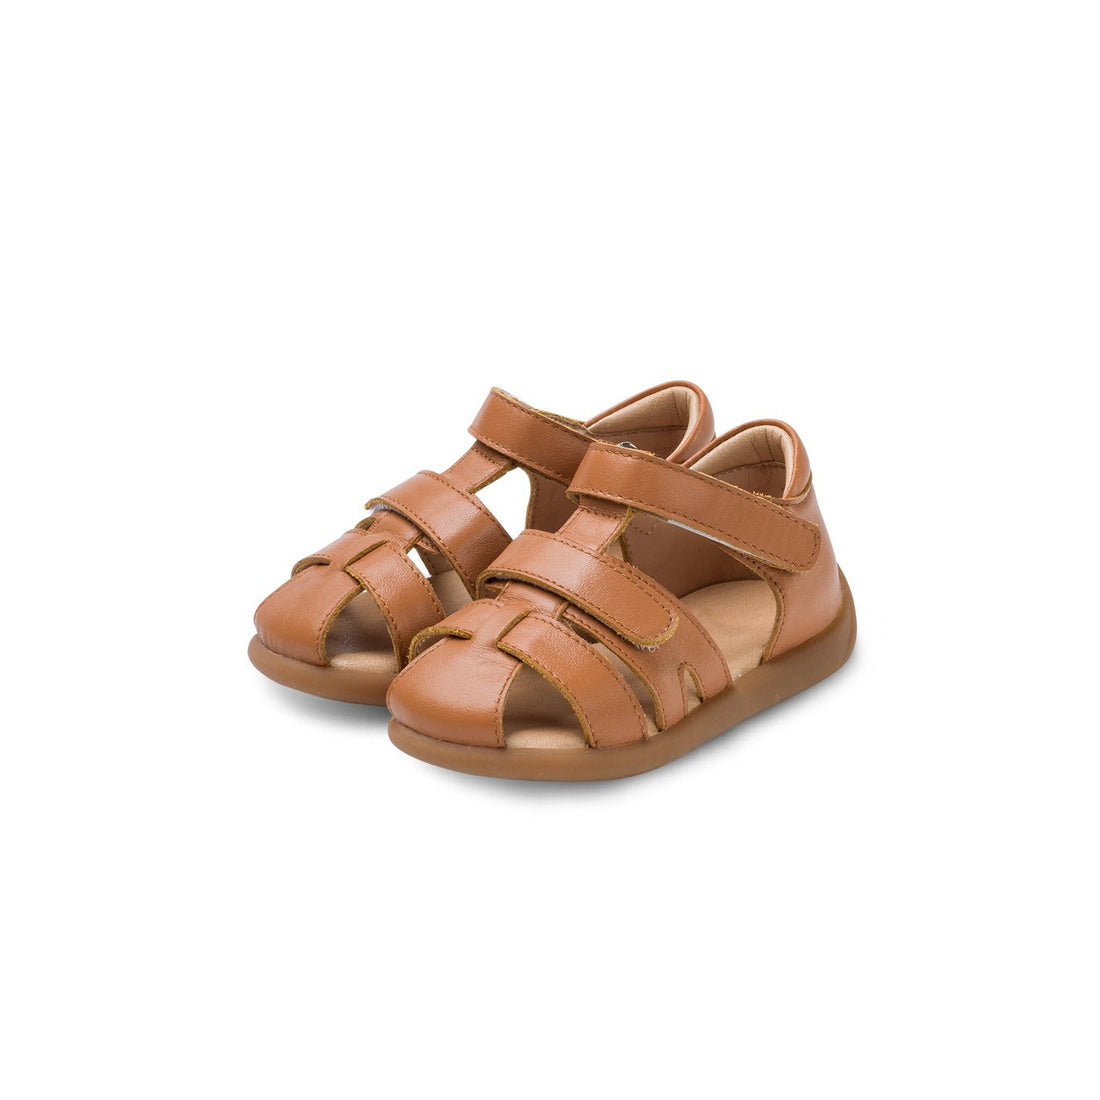 Magic Maze Soft Sole Pre-walker Brown Baby Sandals - 0cm